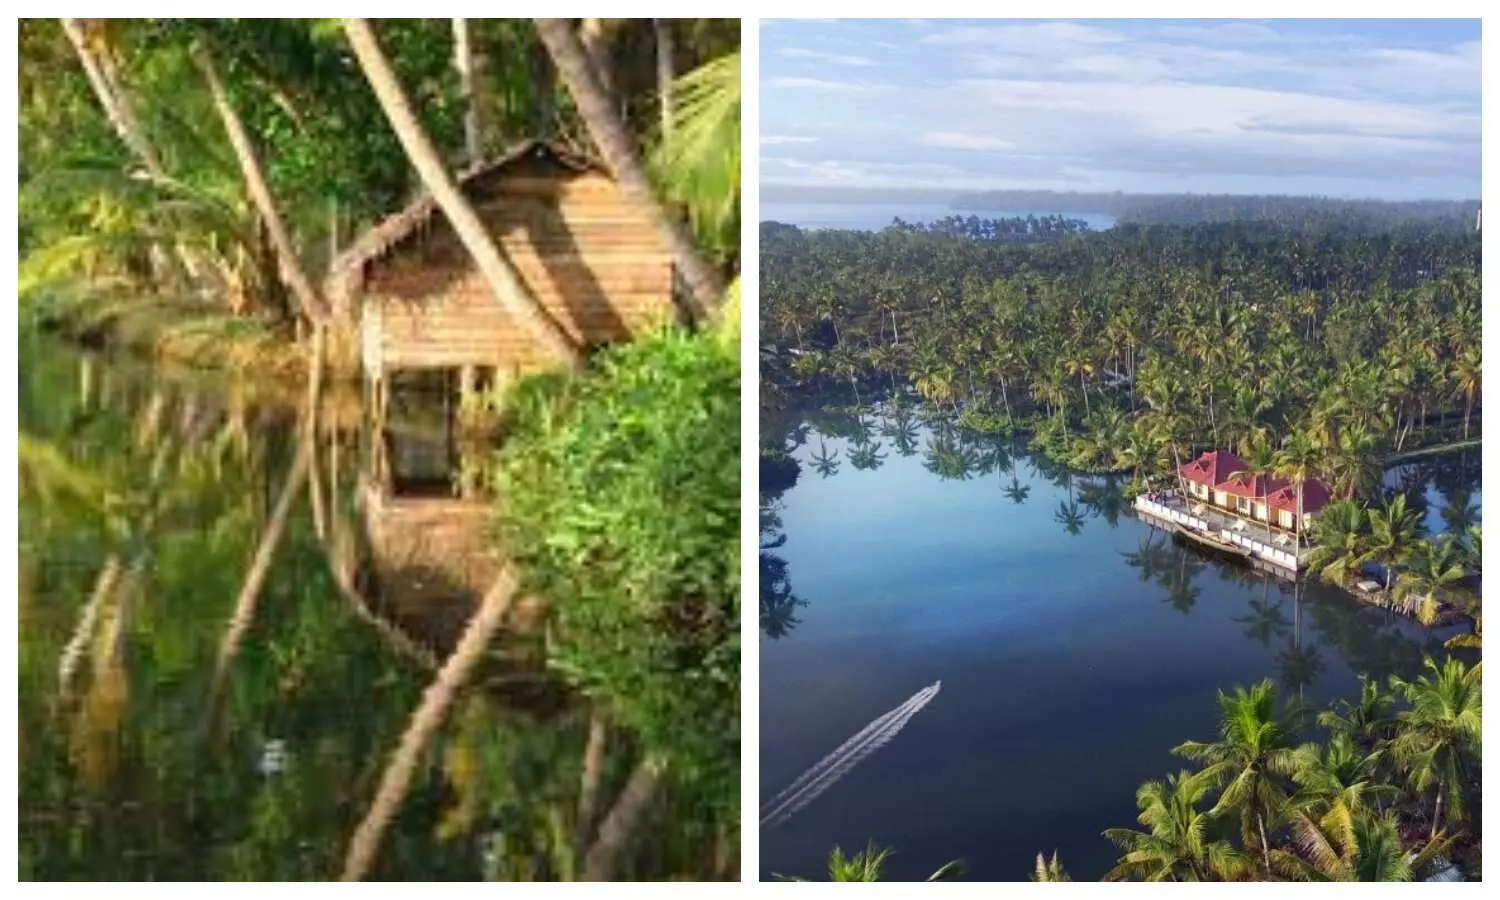 Munroe Island Kerala